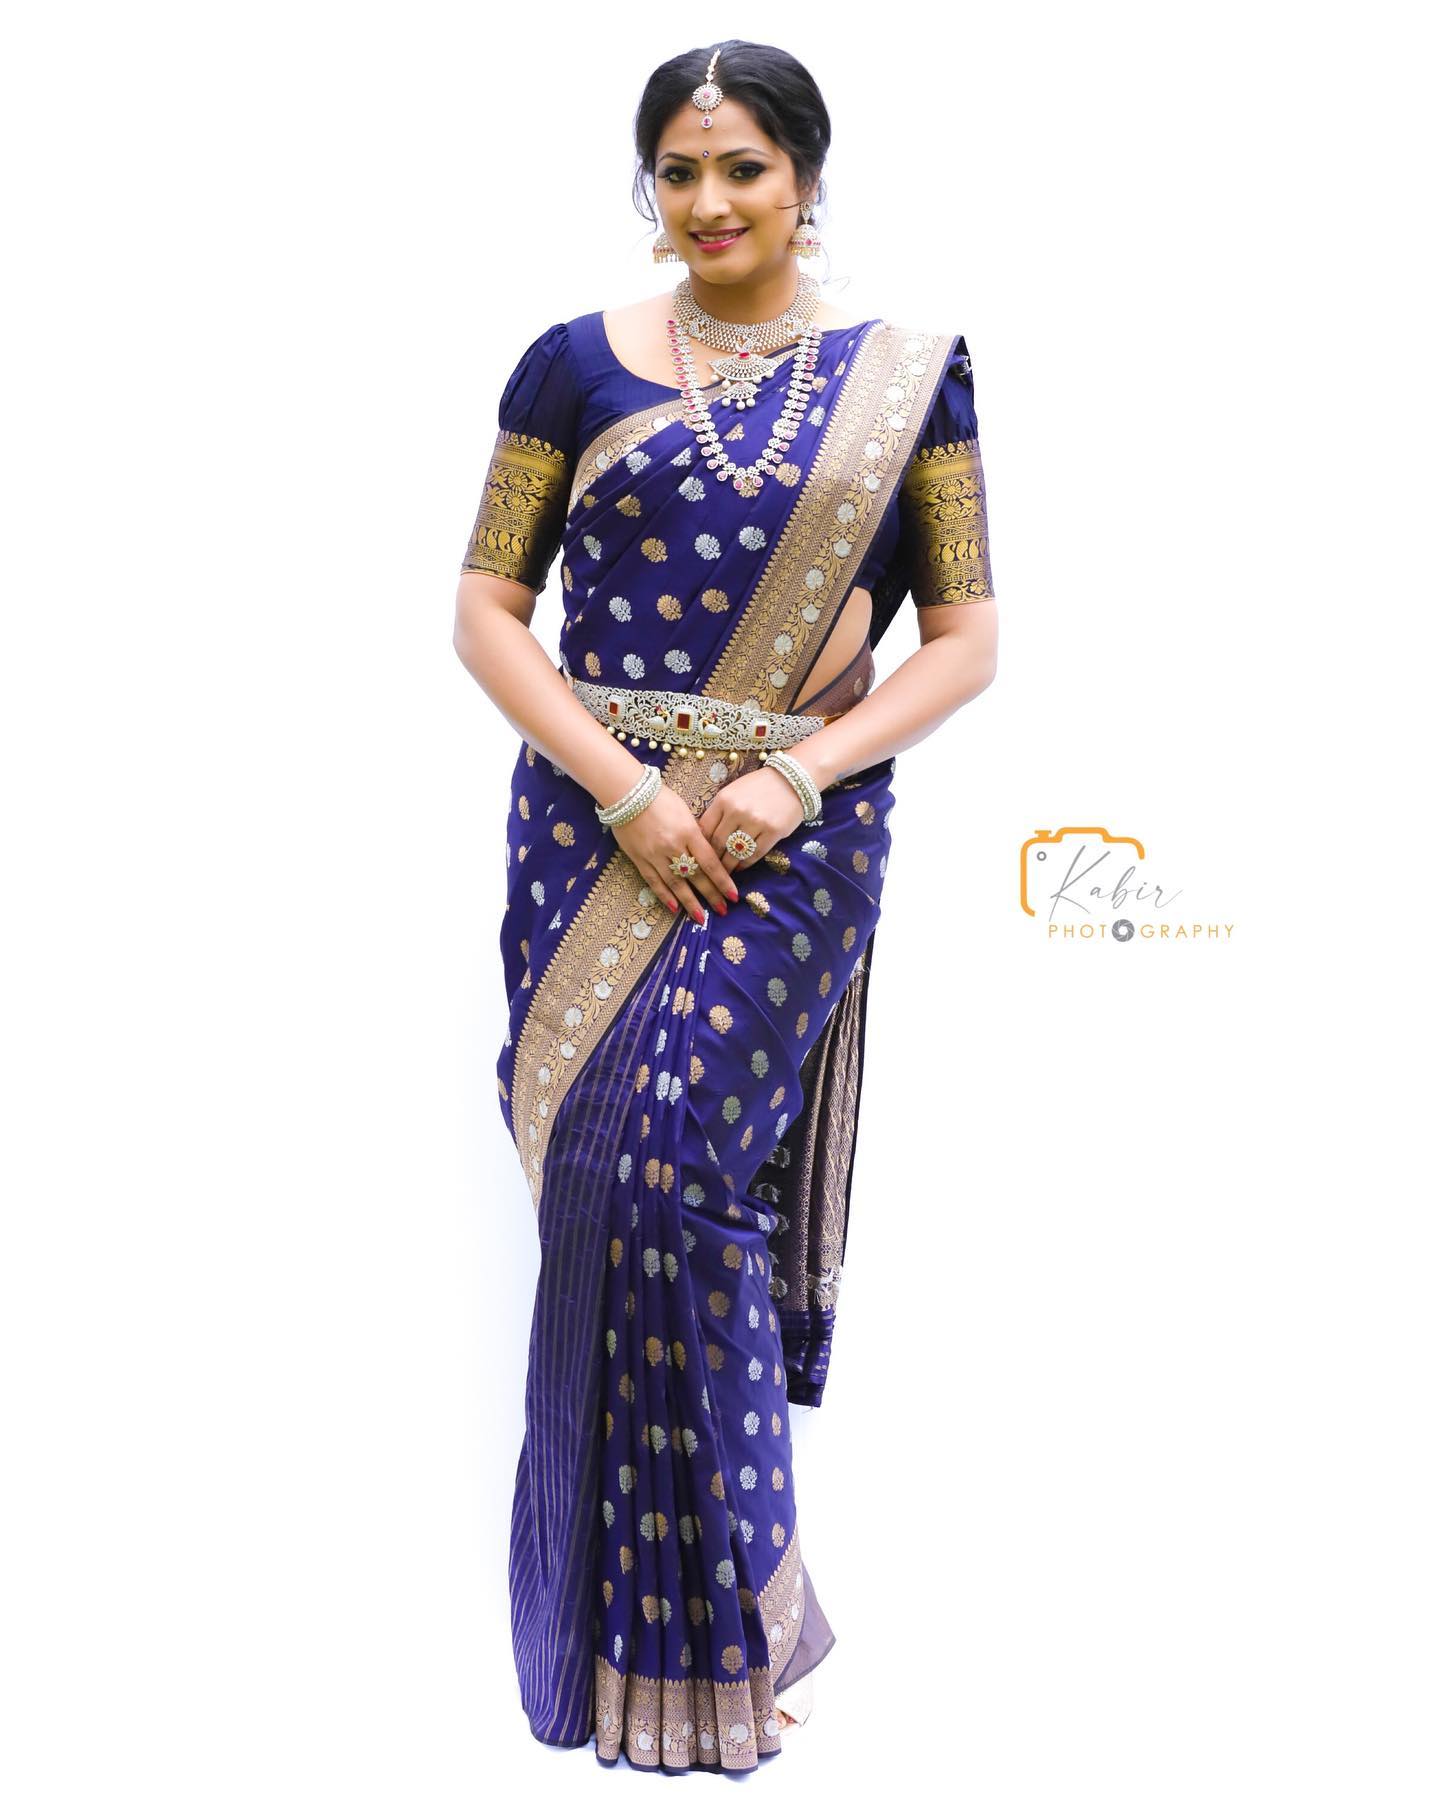 Hariprriya In Royal Blue Zari Woven Banarasi Silk Saree With Diamond Bridal Jewellery Outfits Fashion